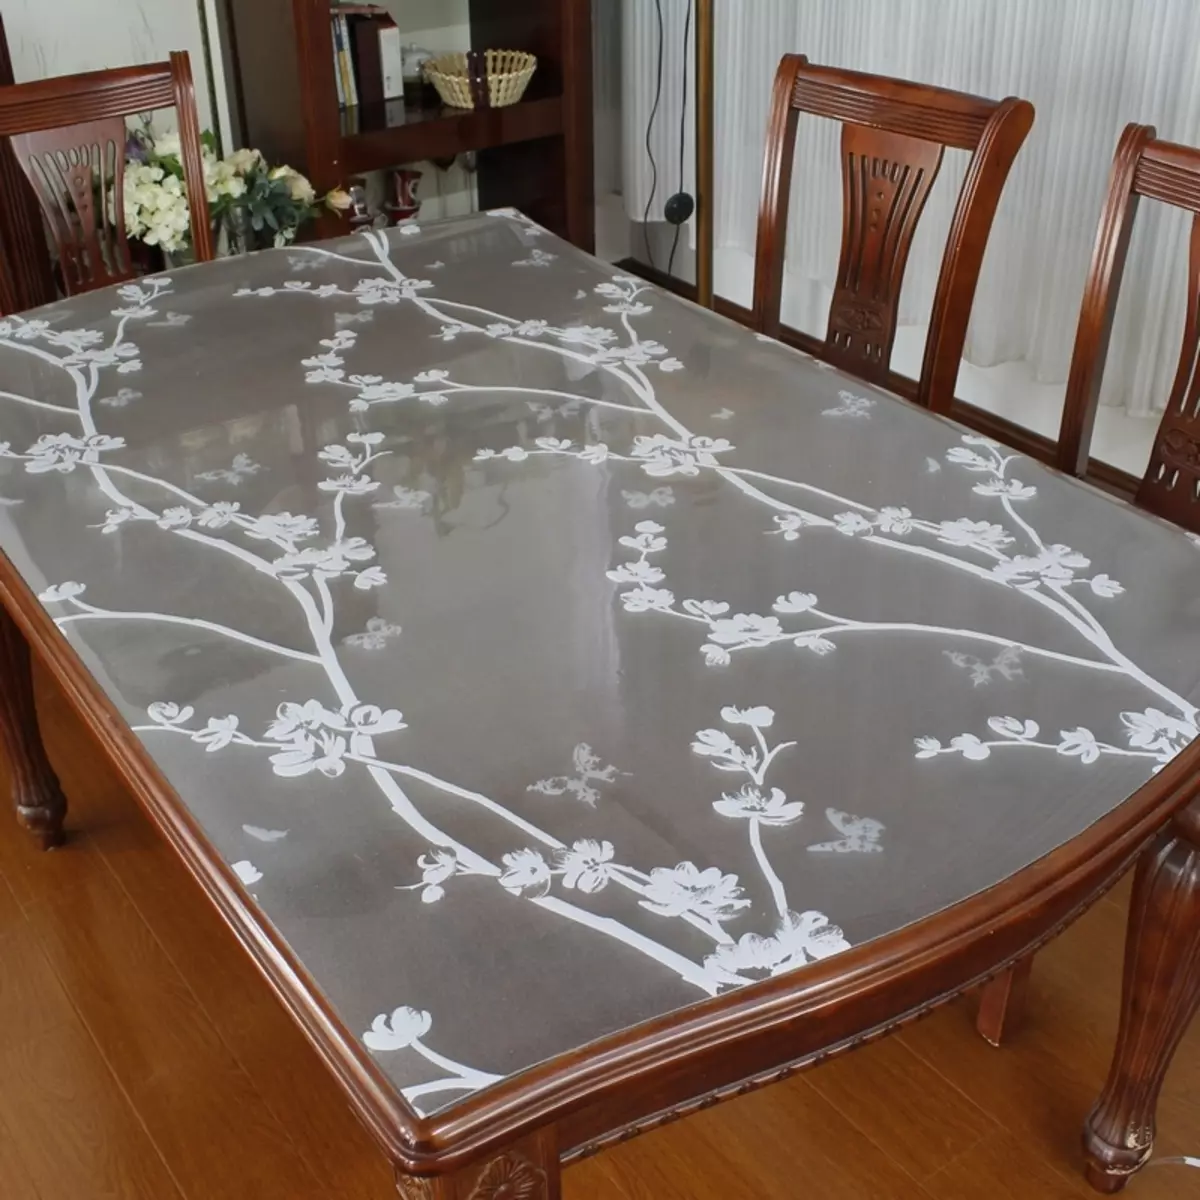 Kleenka على الطاولة (51 صور): جميلة مفارش المائدة لاصقة بيضاء في لفافة، وتحت شجرة وغيرها. ماذا تفعل إذا الغراء الجديد الروائح كثيرا؟ 21613_9